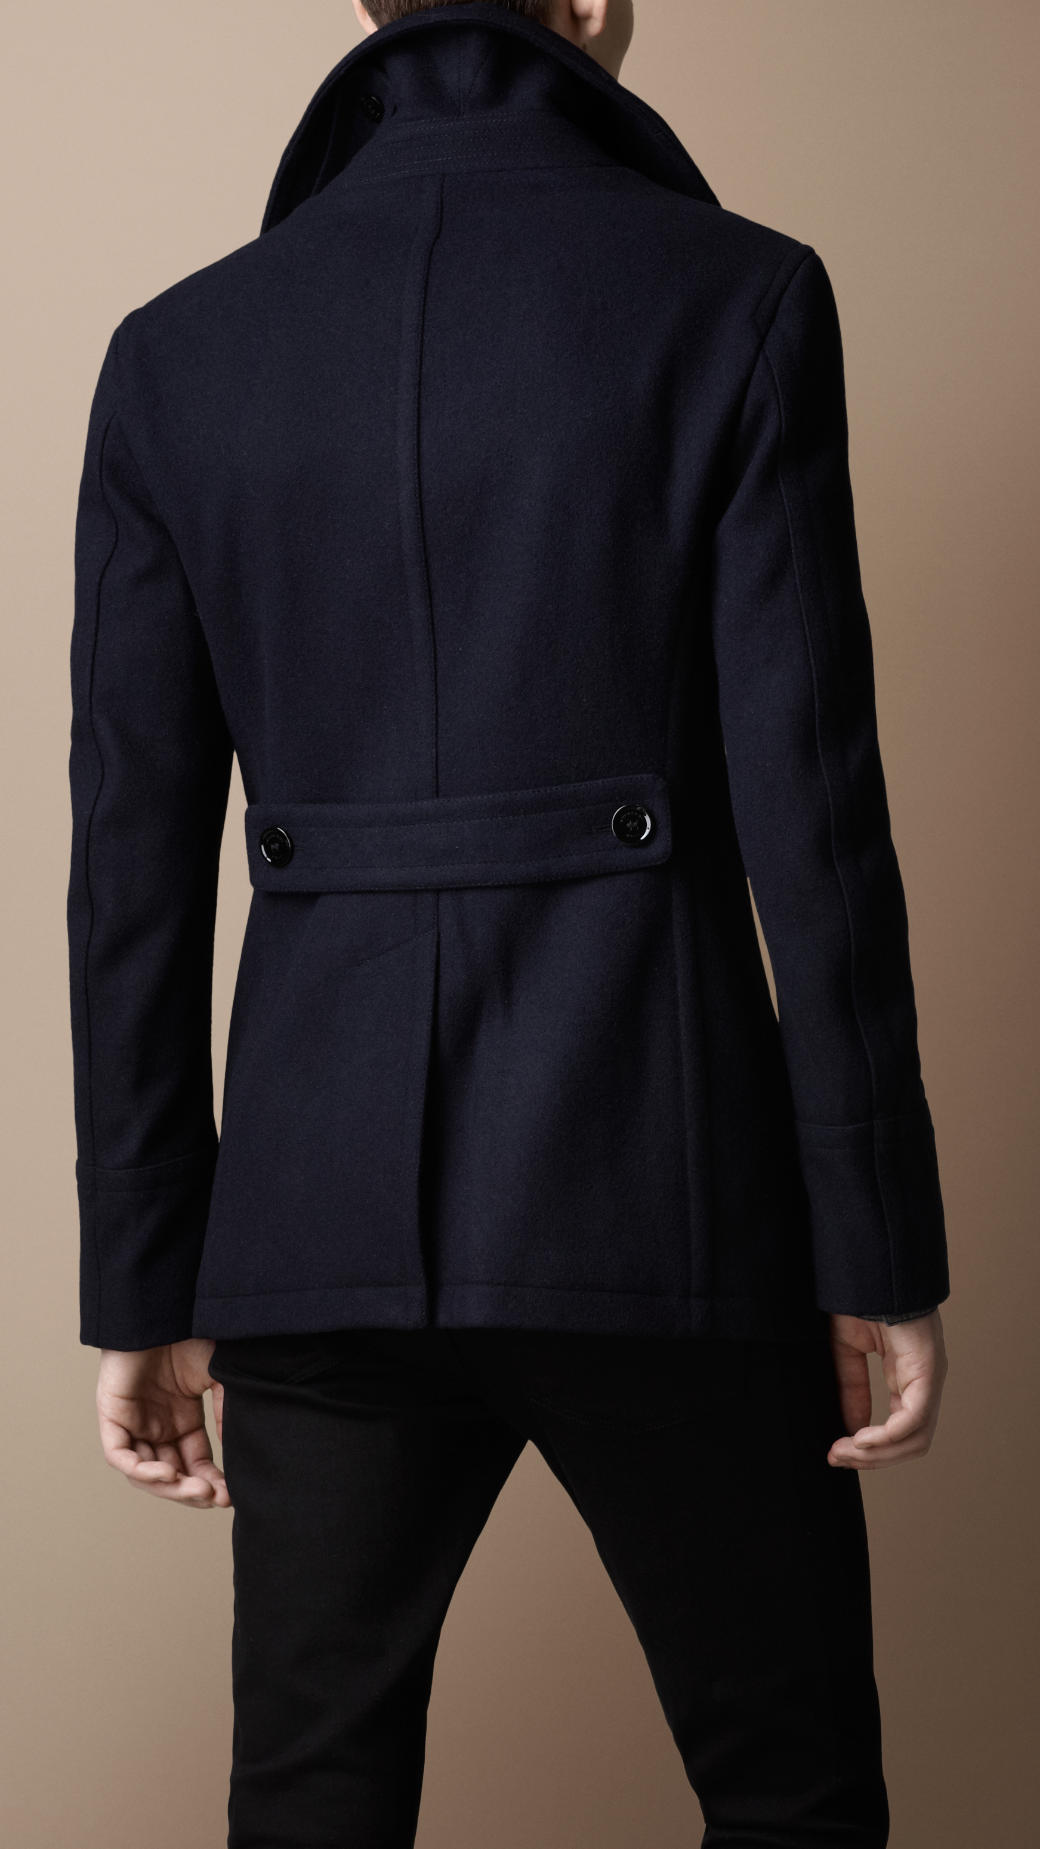 Lyst - Burberry Brit Wool Blend Pea Coat in Black for Men